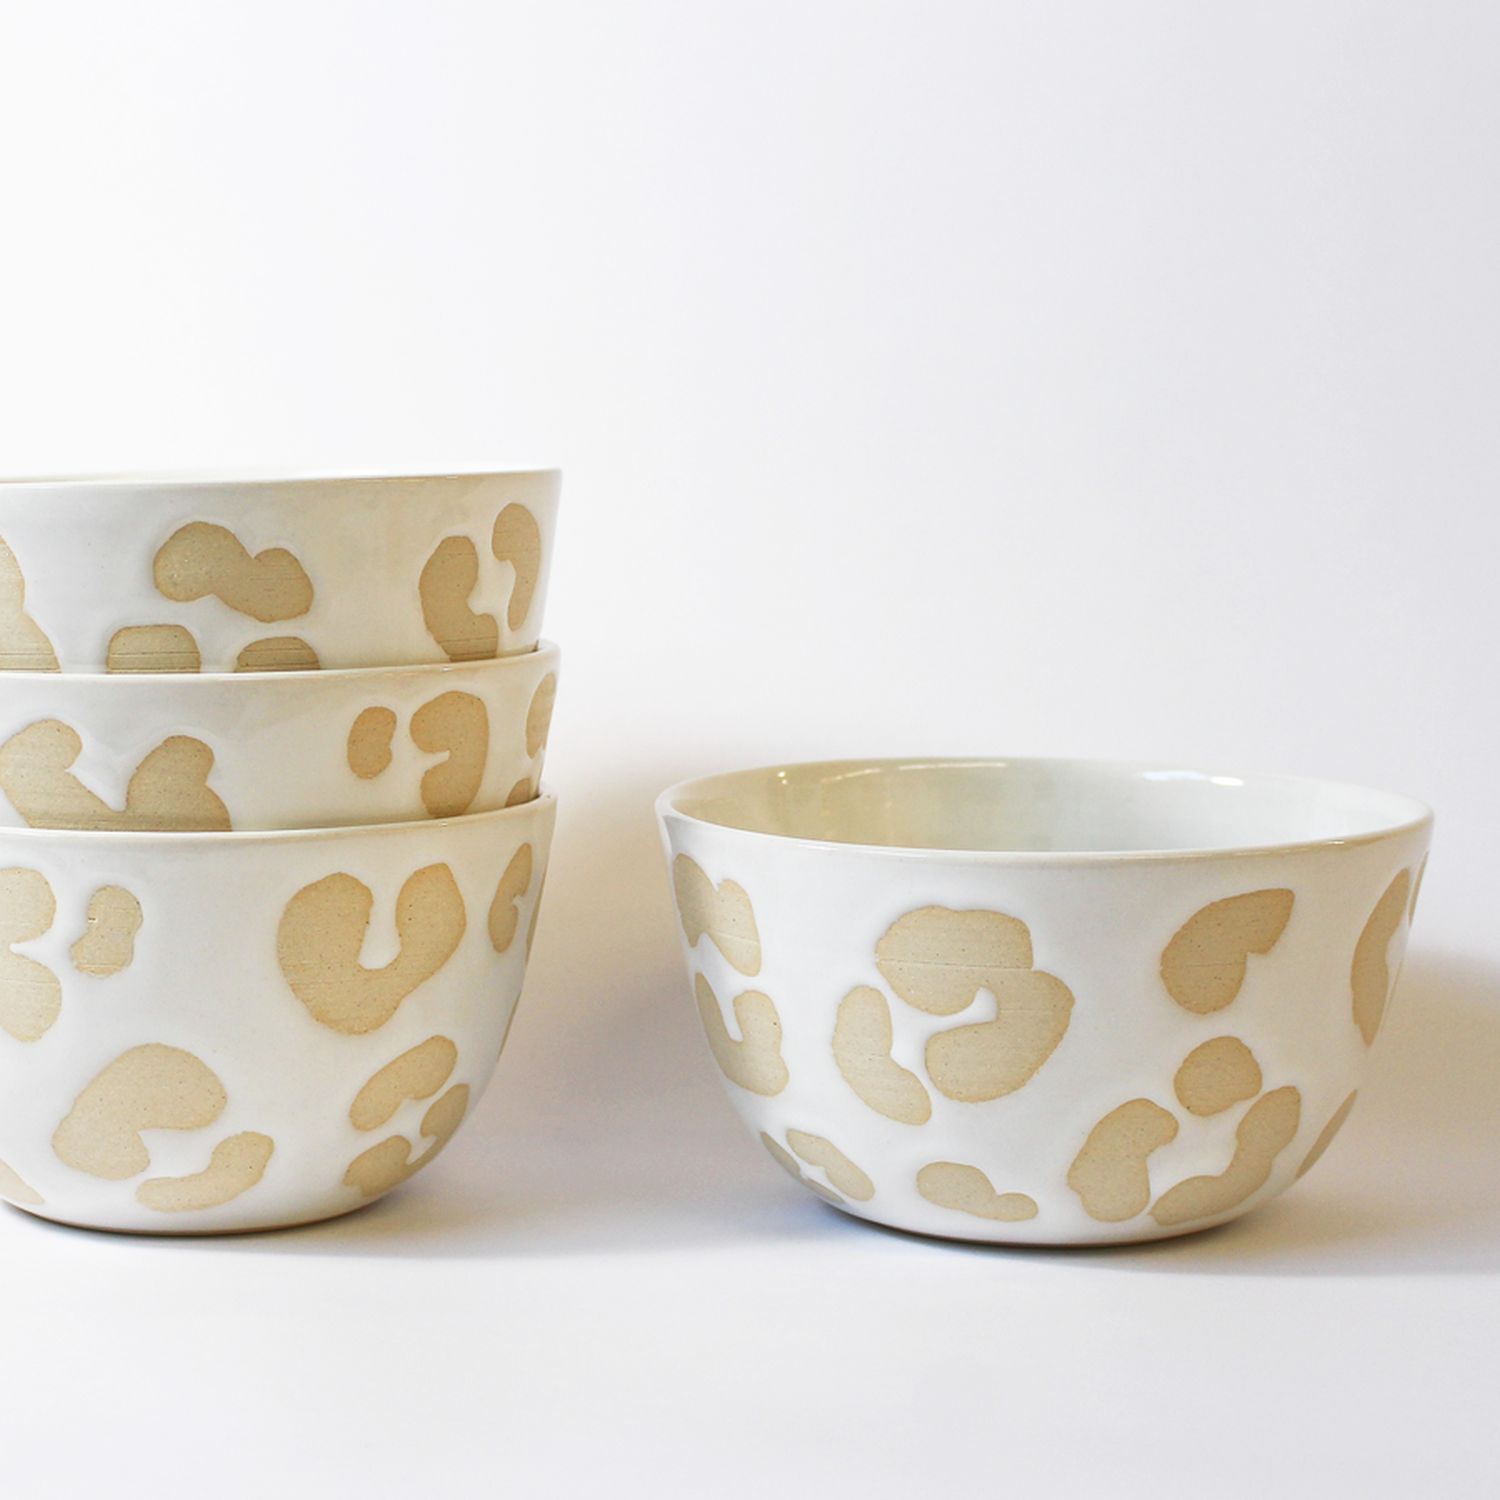 Mima Ceramics: Small Bowl White Product Image 1 of 1